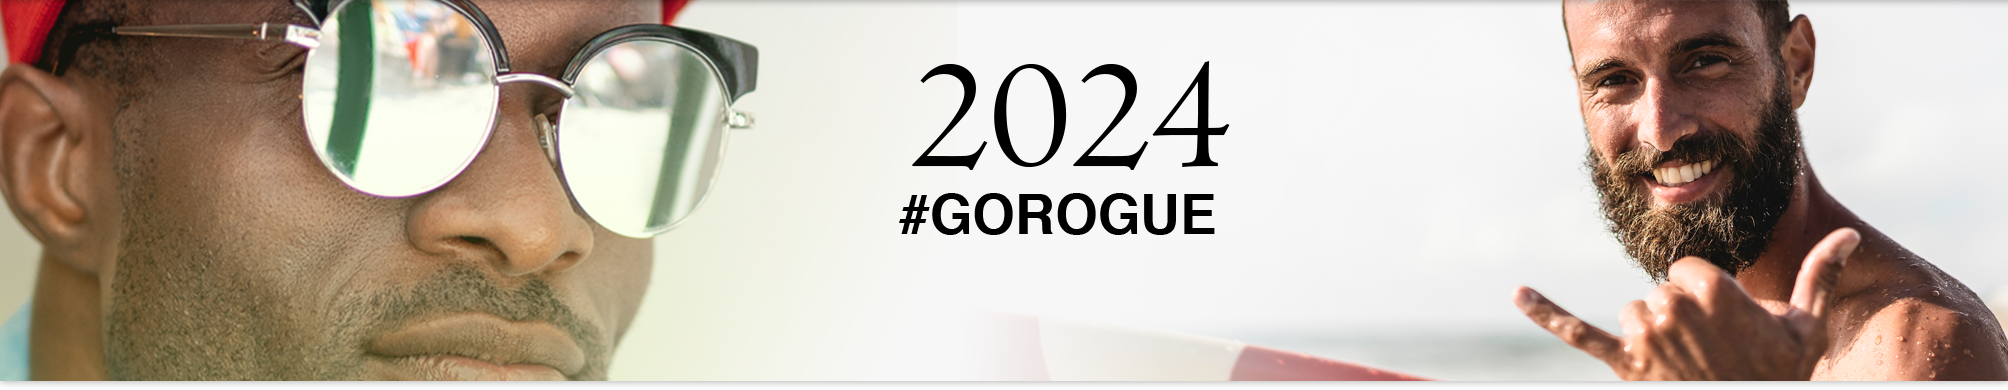 Gorgue 2024 hero